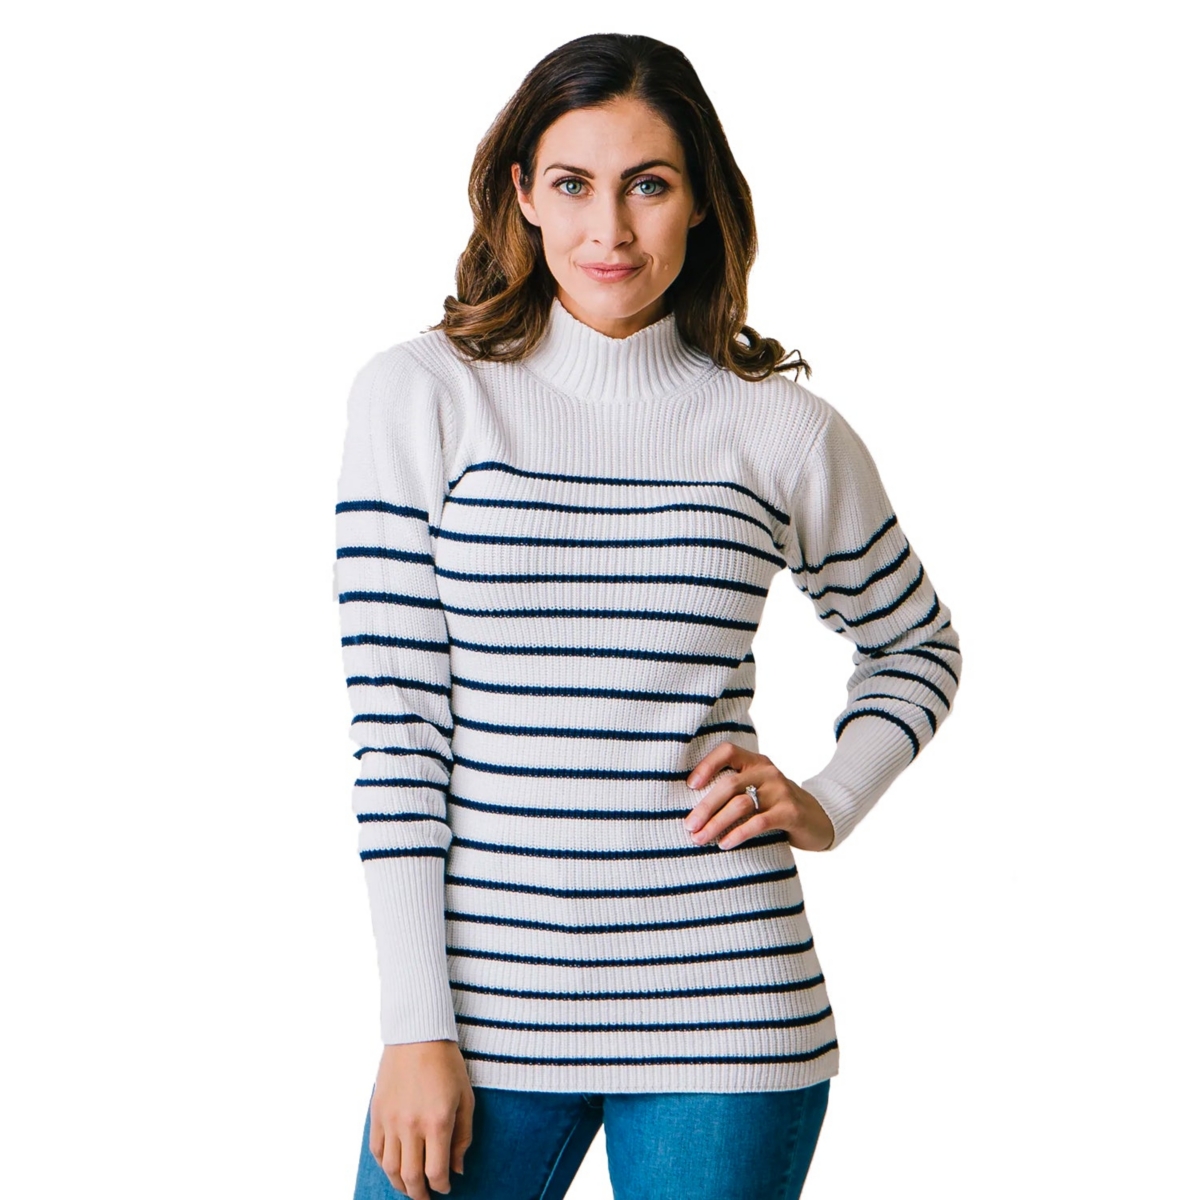 Women's Long Sleeve Mock Neck Breton Sweater - Soft White and Navy Stripe